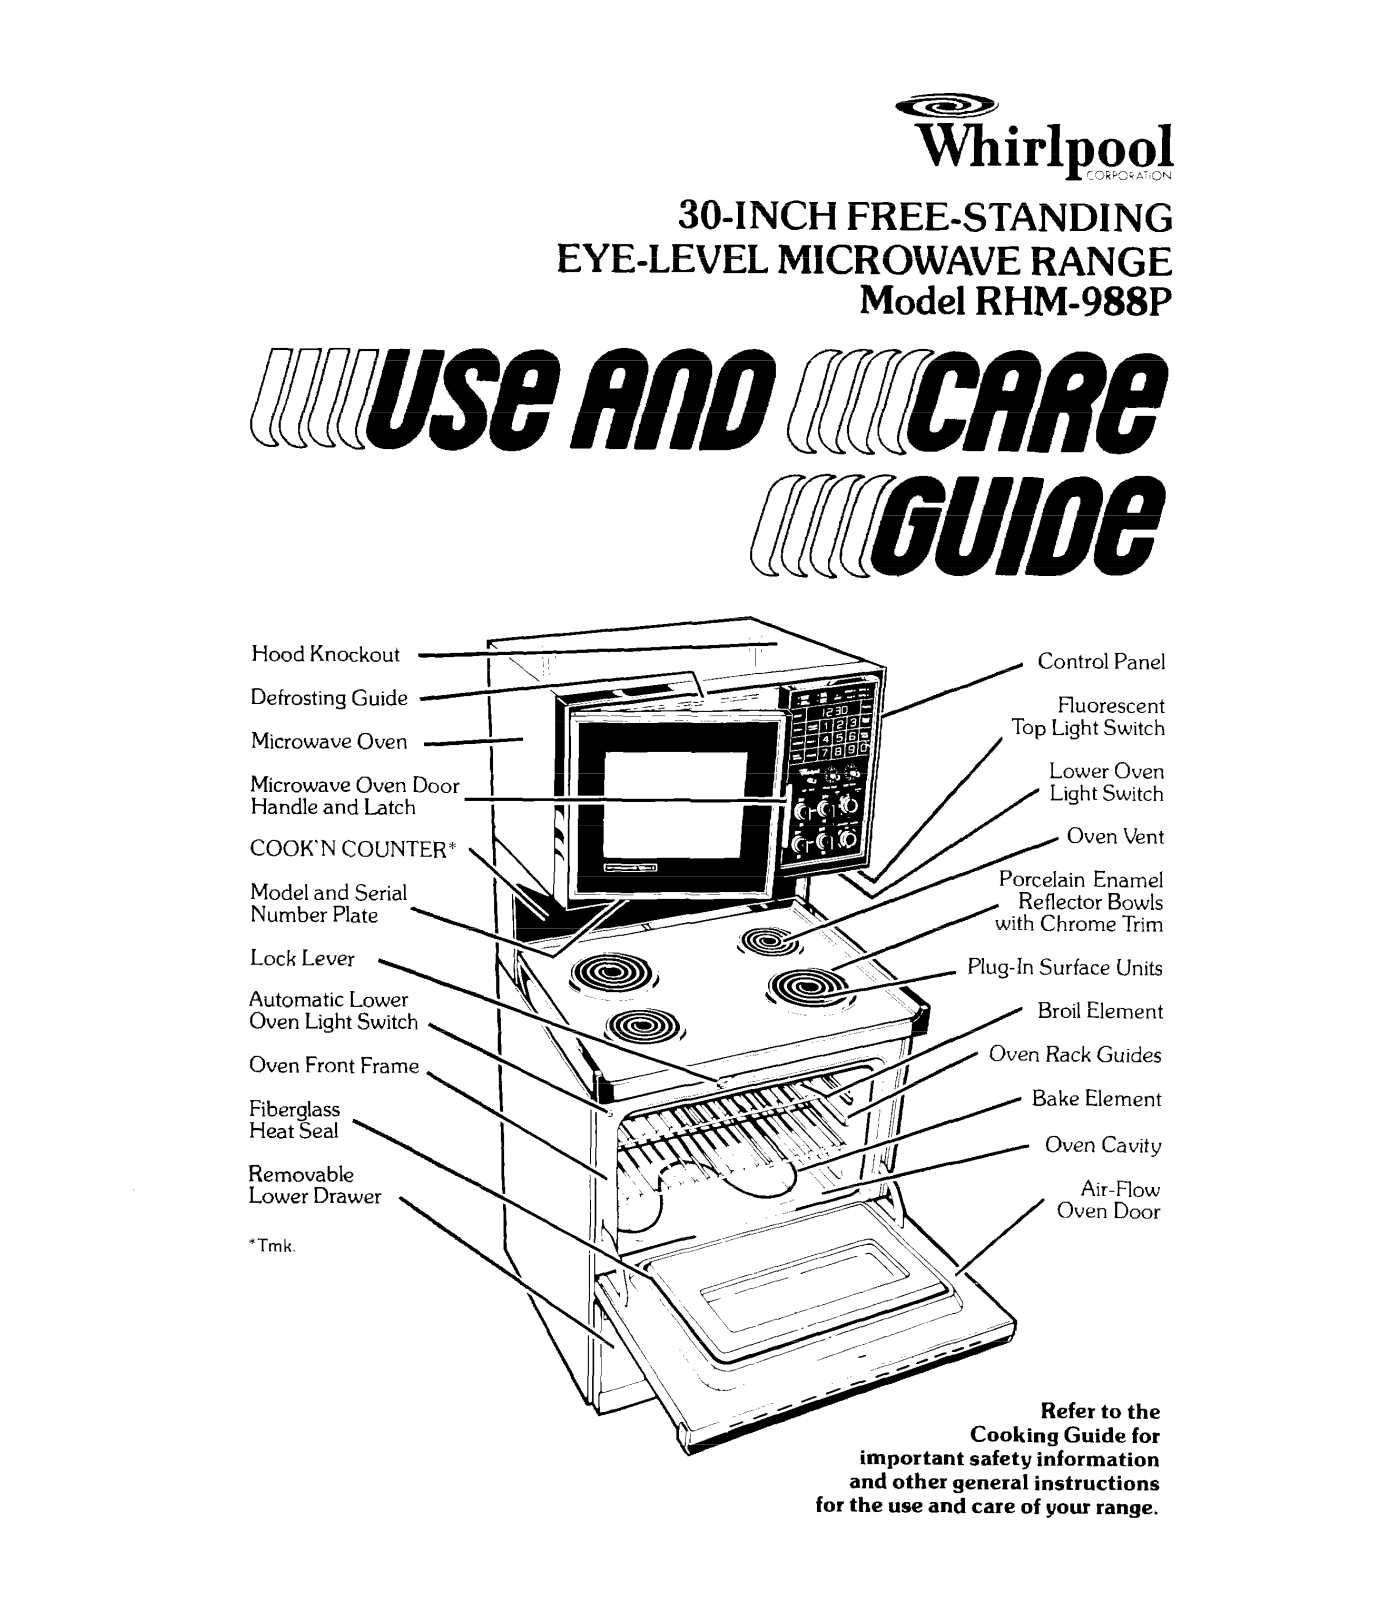 Whirlpool RHM-988P Owner's Manual